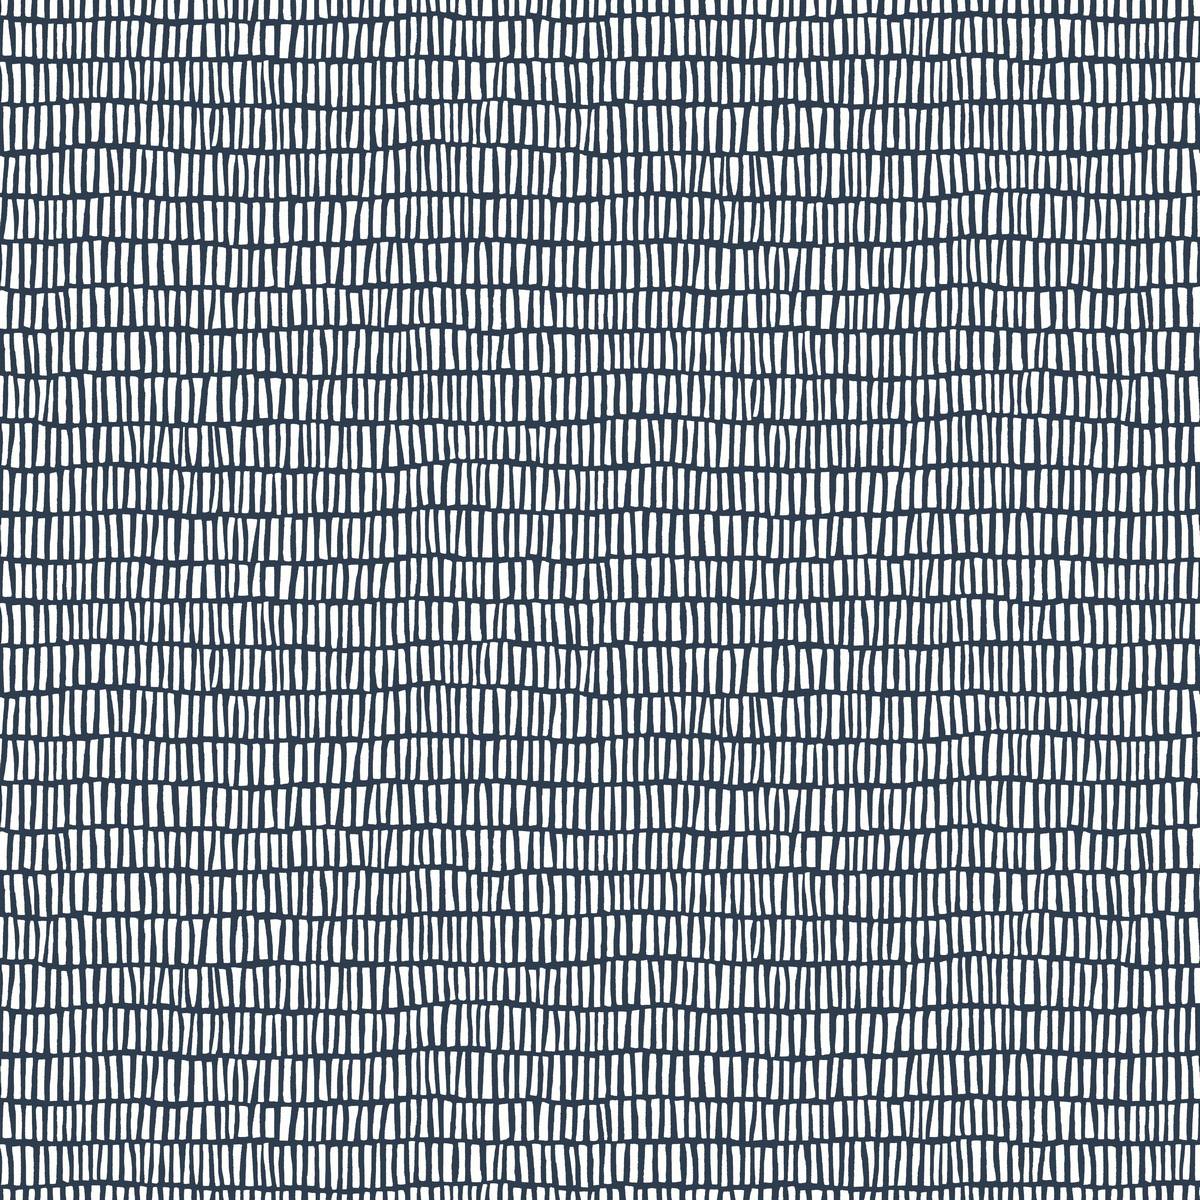 Tocca Denim Fabric by Scion